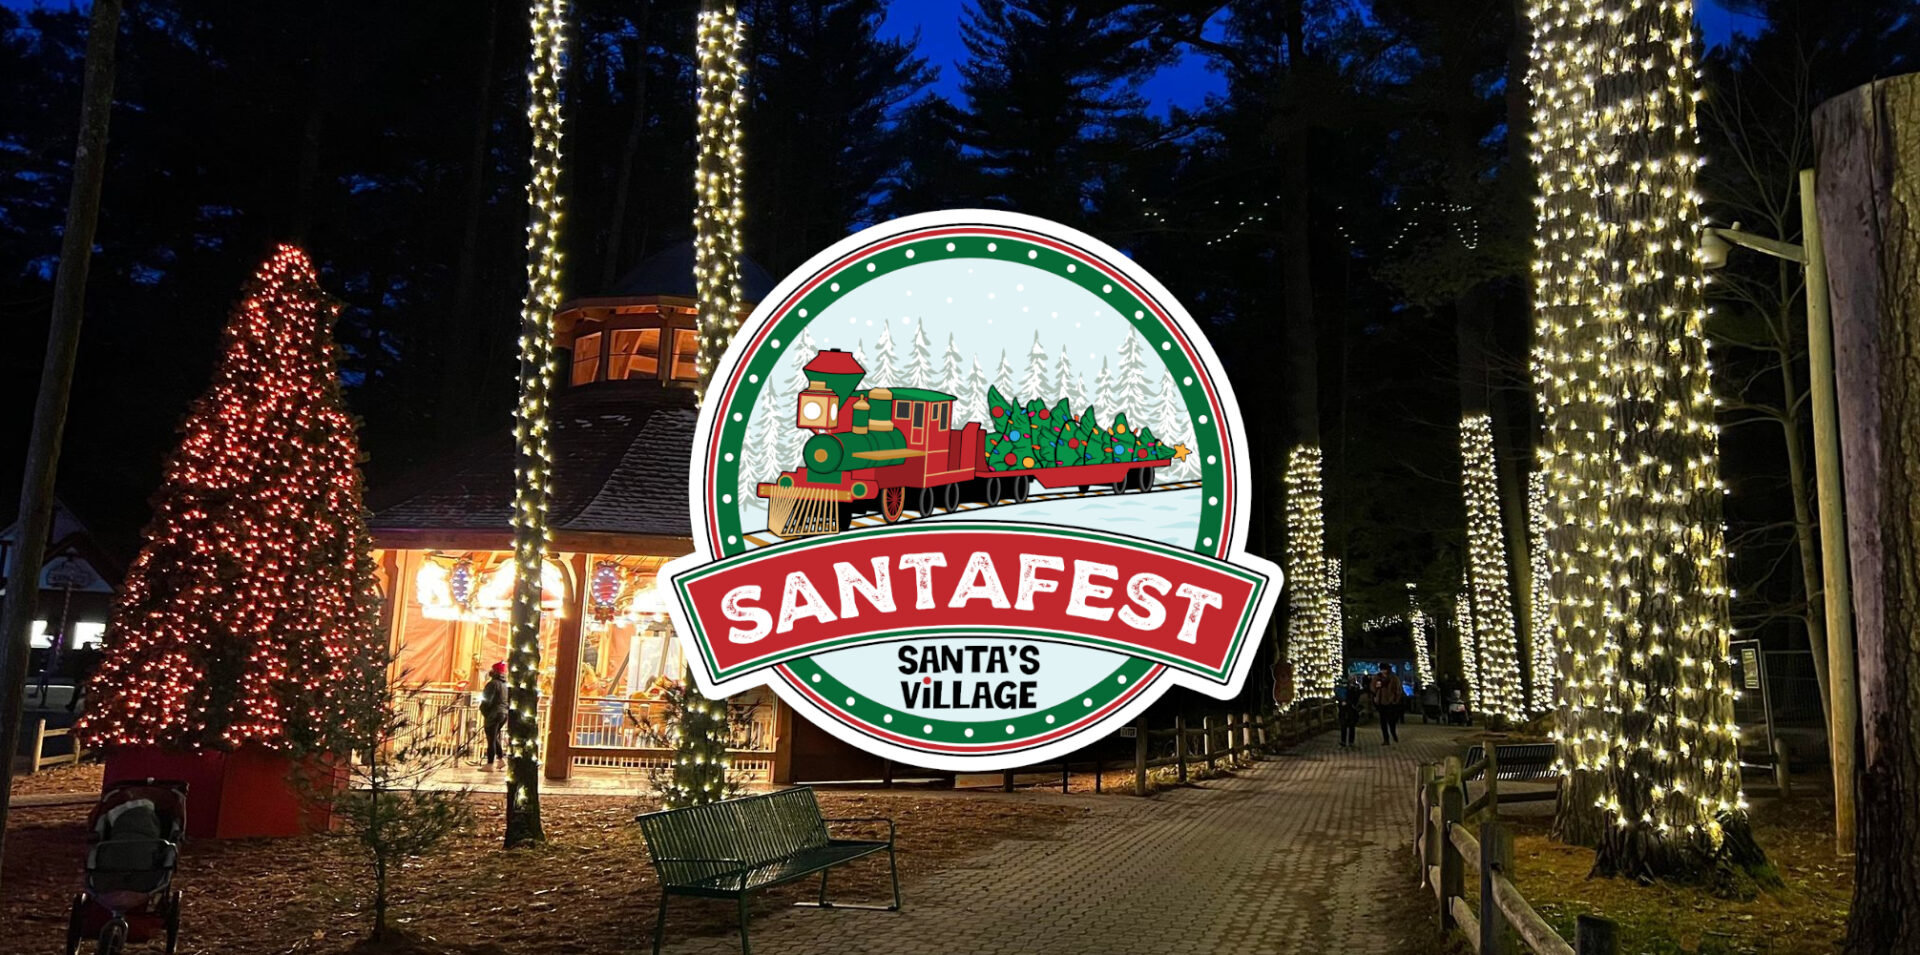 Santafest at Santa's Village